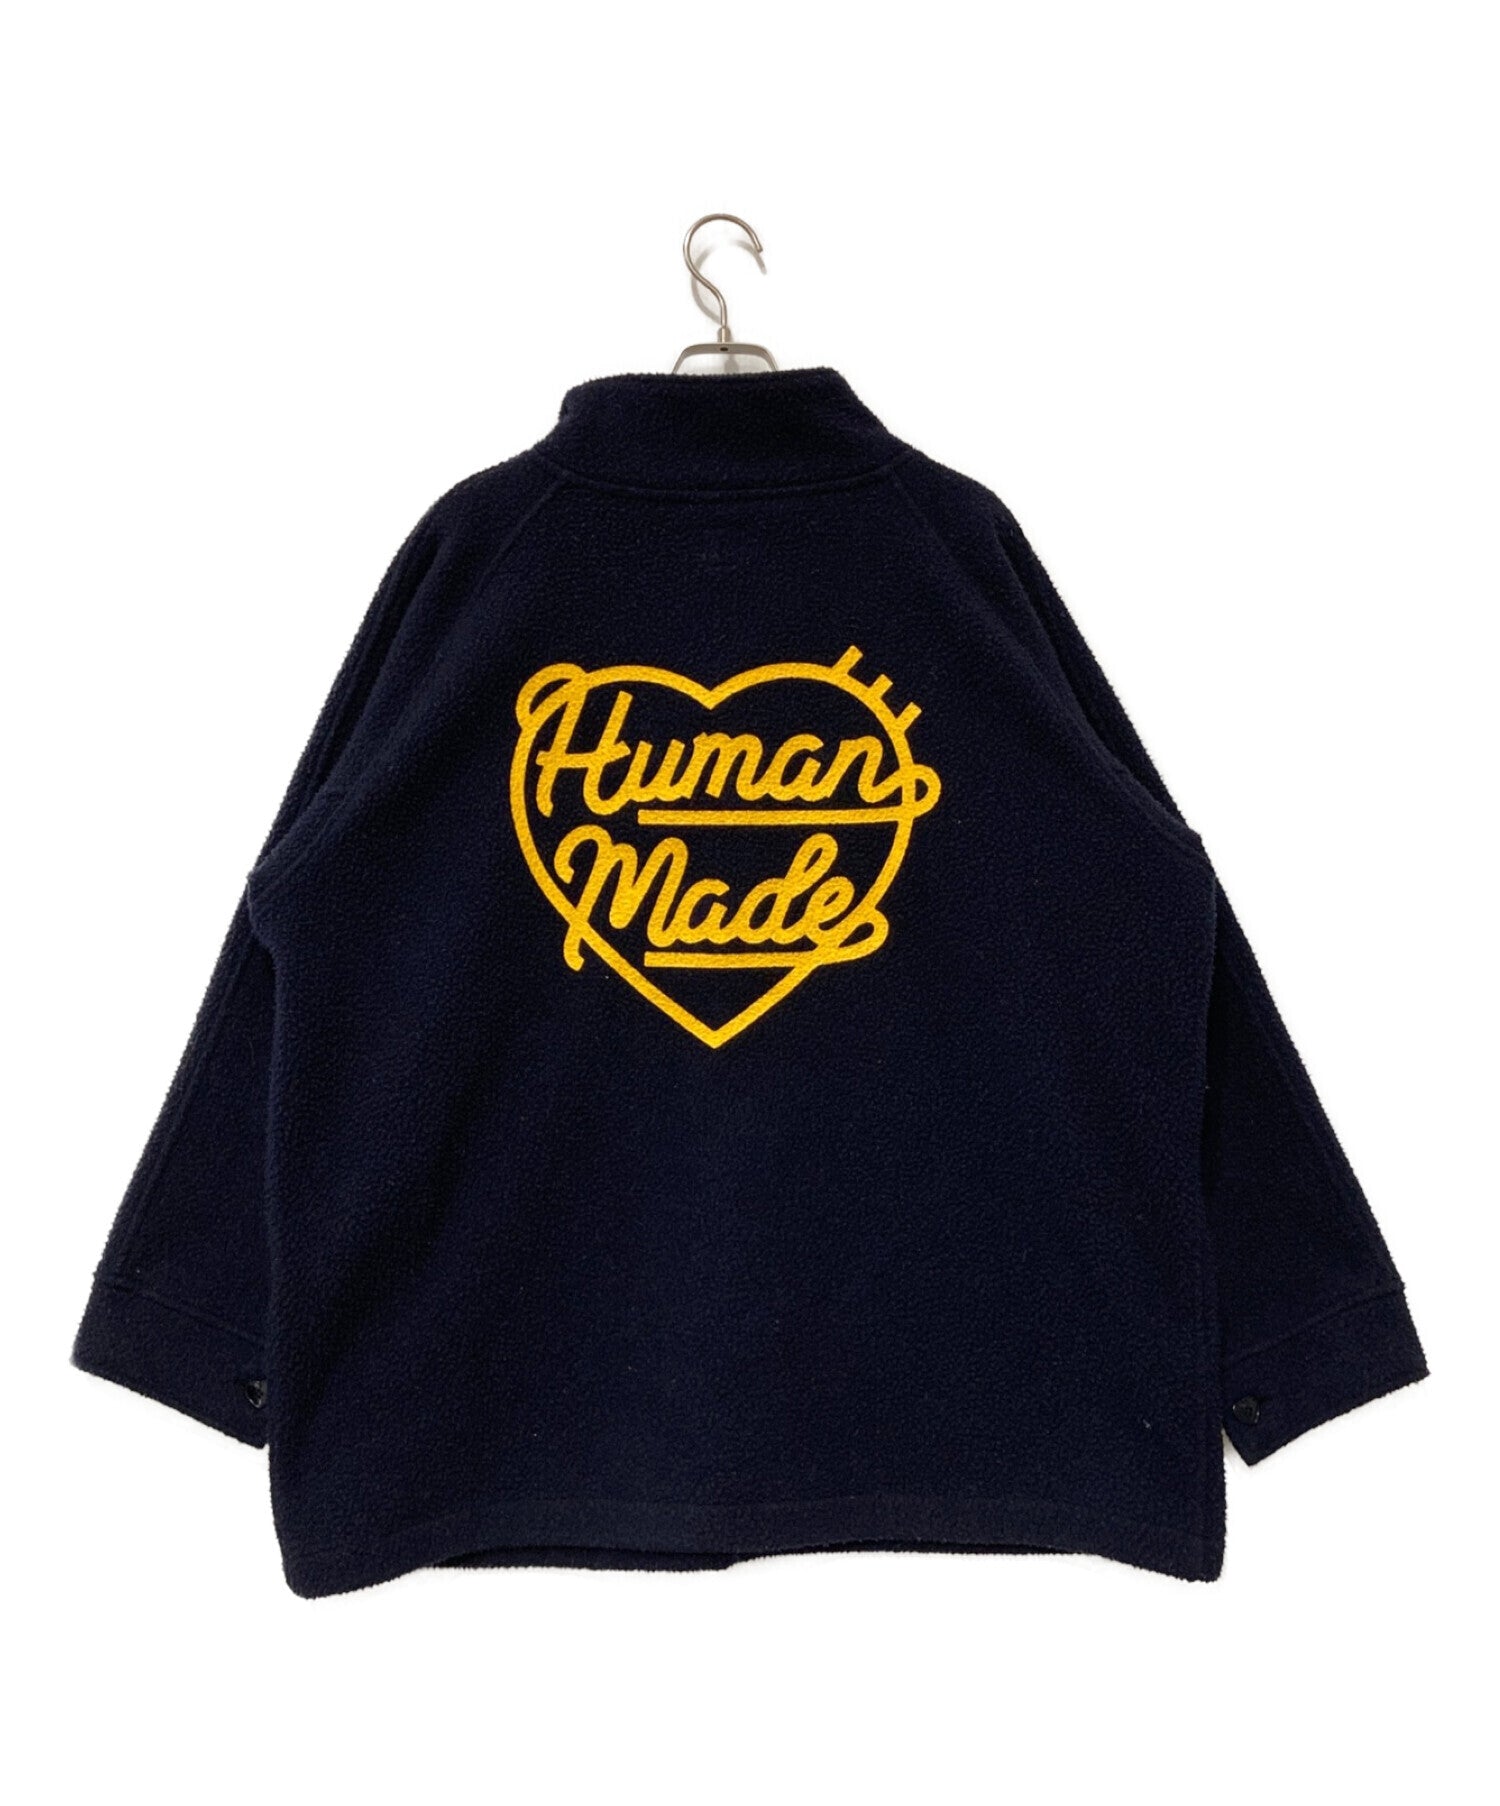 HUMAN MADE P/O FLEECE JACKET / Toggle fleece jacket | Archive Factory